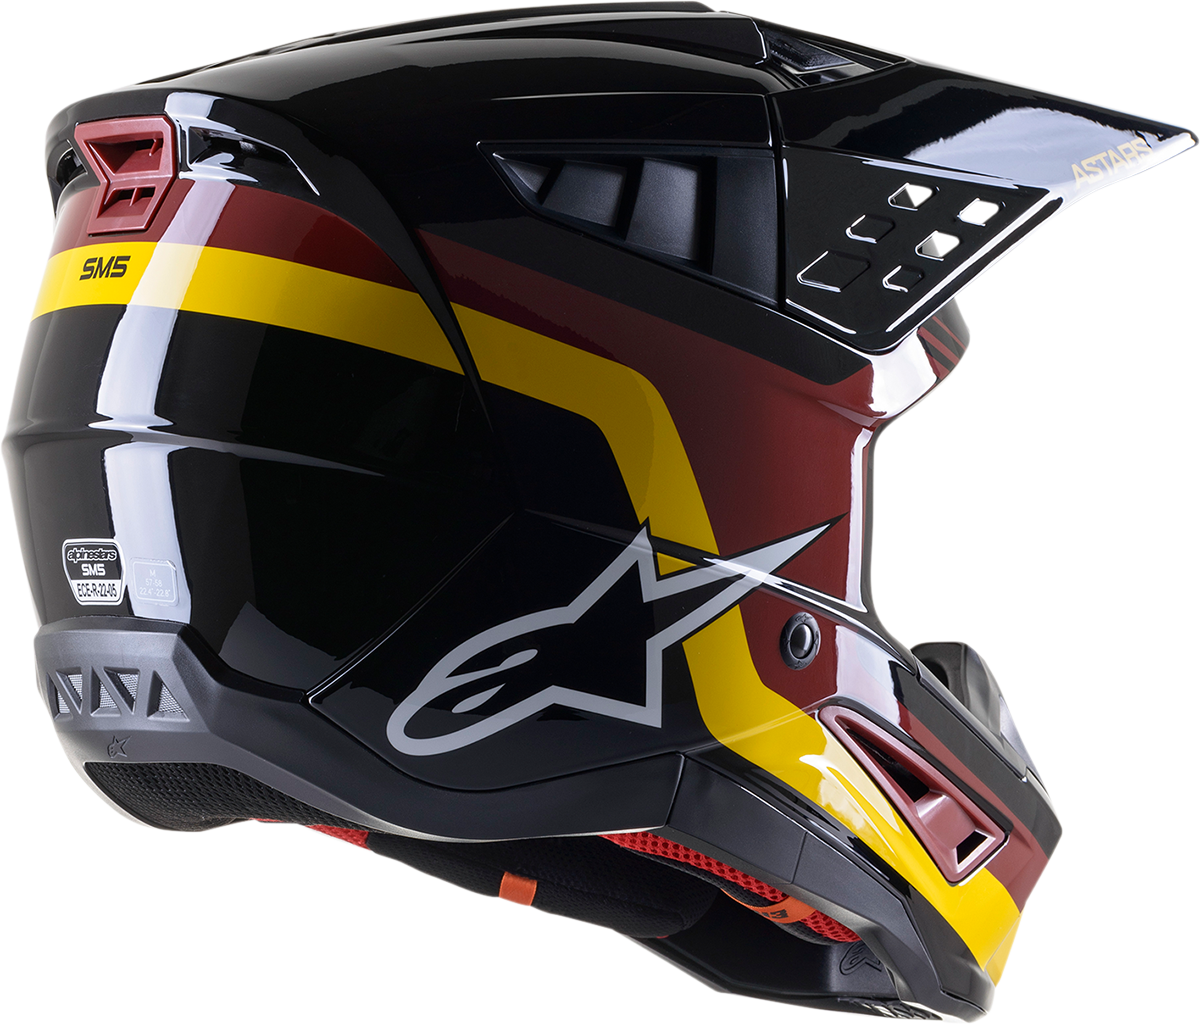 ALPINESTARS SM5 Helmet - Venture - Black/Bordeaux/Yellow/Glossy - Large 8305122-1358-LG